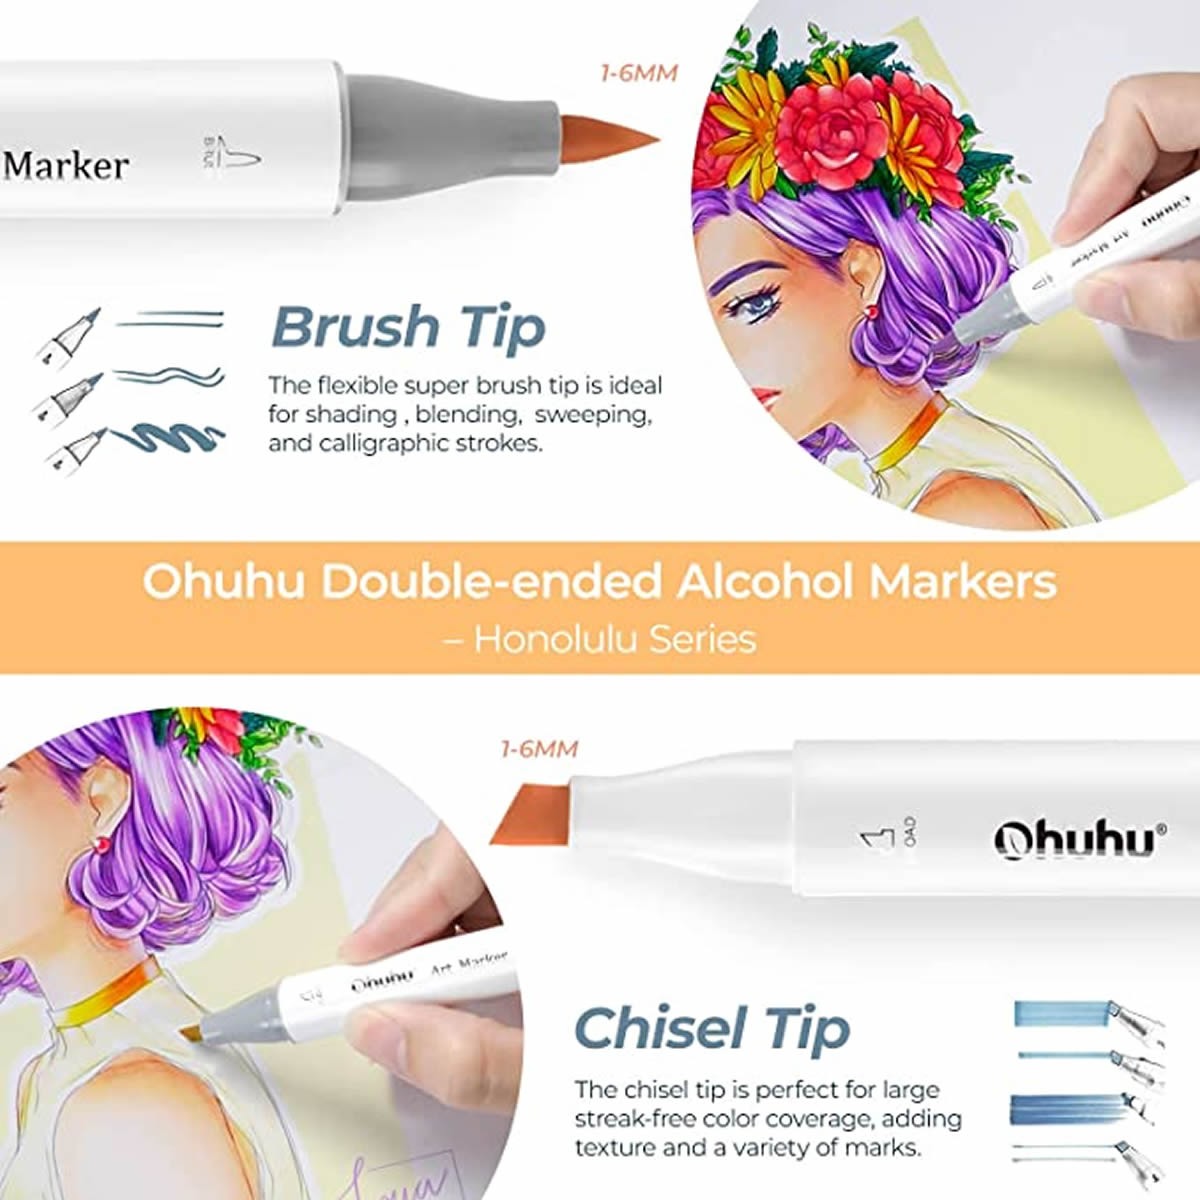 OHUHU Honolulu Alcohol Art Markers Σετ Μαρκαδόρων 72 χρωμάτων Brush & Chisel